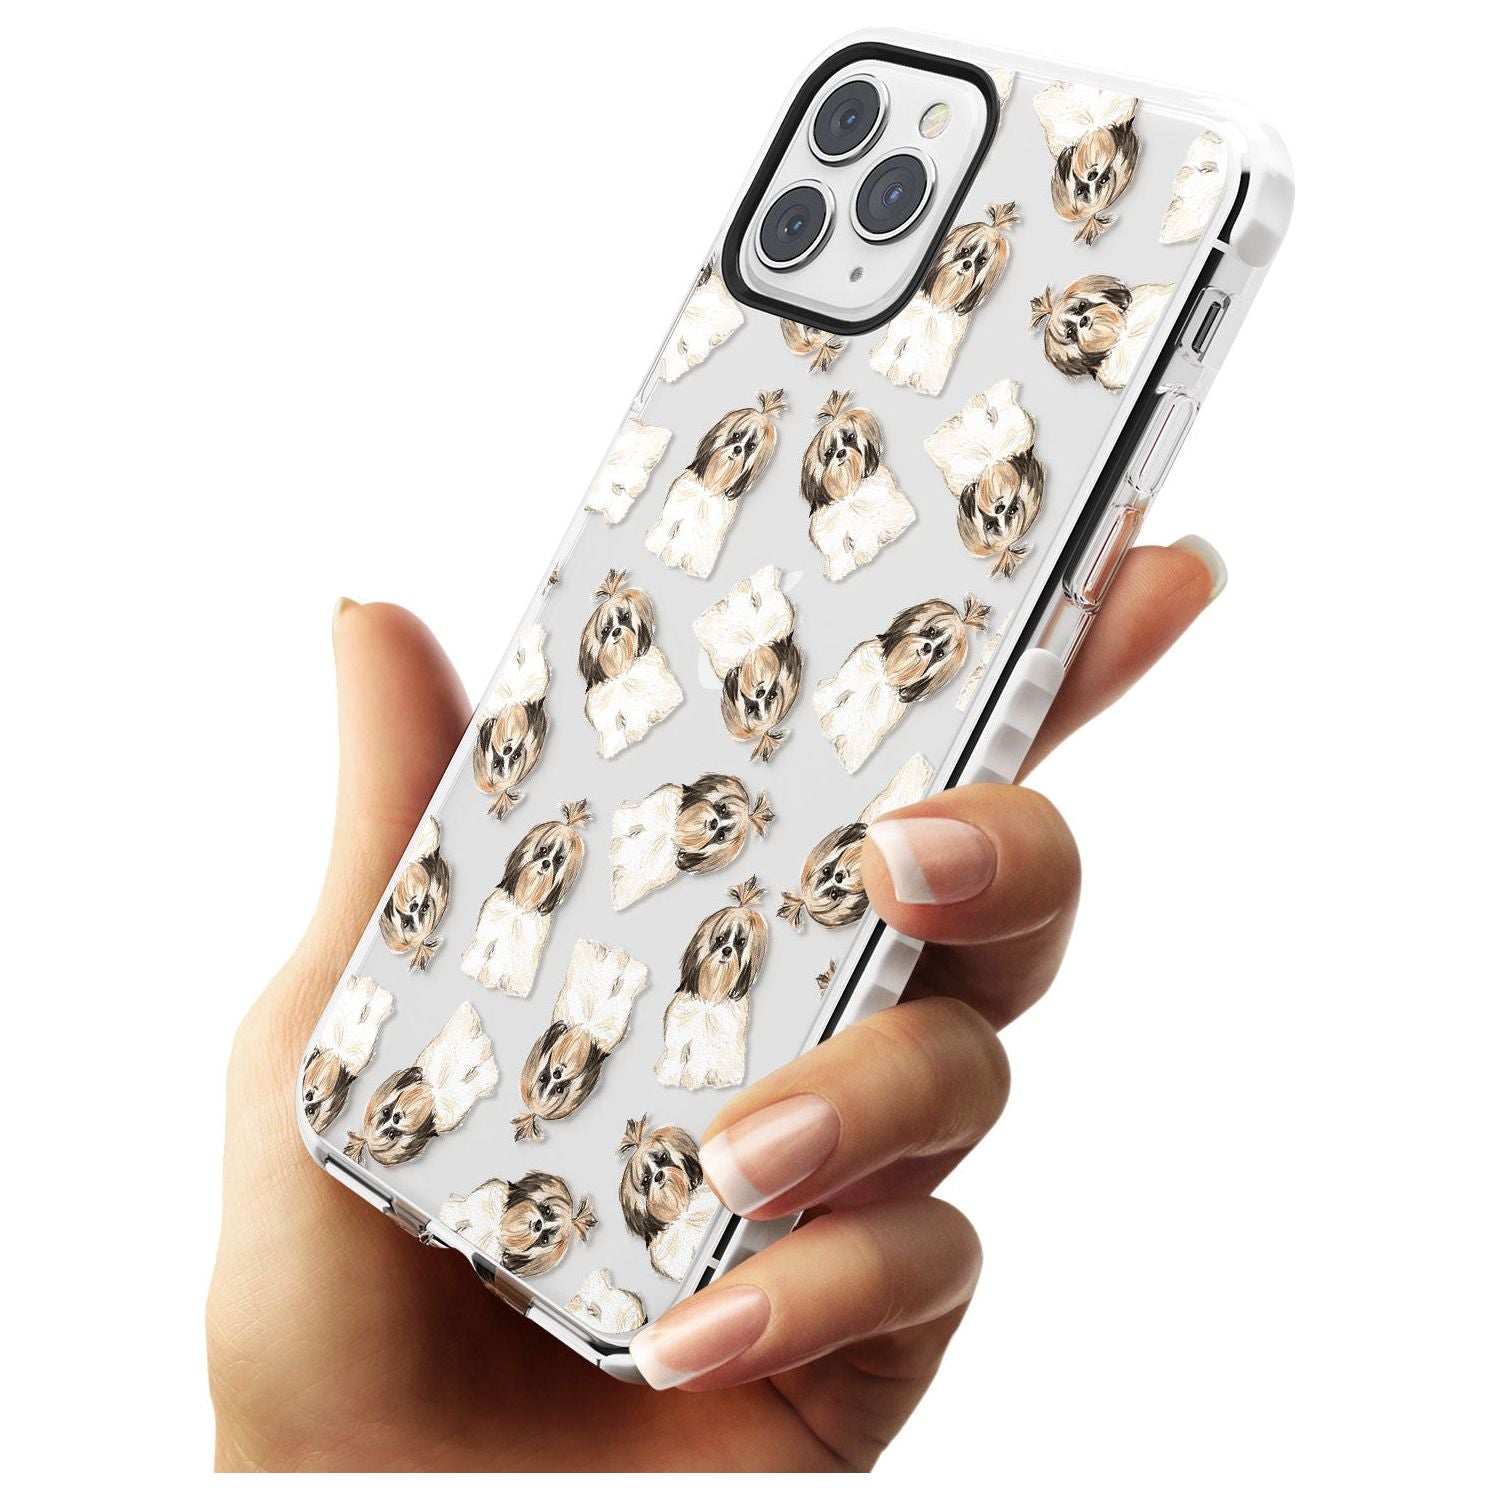 Shih tzu (Long Hair) Watercolour Dog Pattern Impact Phone Case for iPhone 11 Pro Max